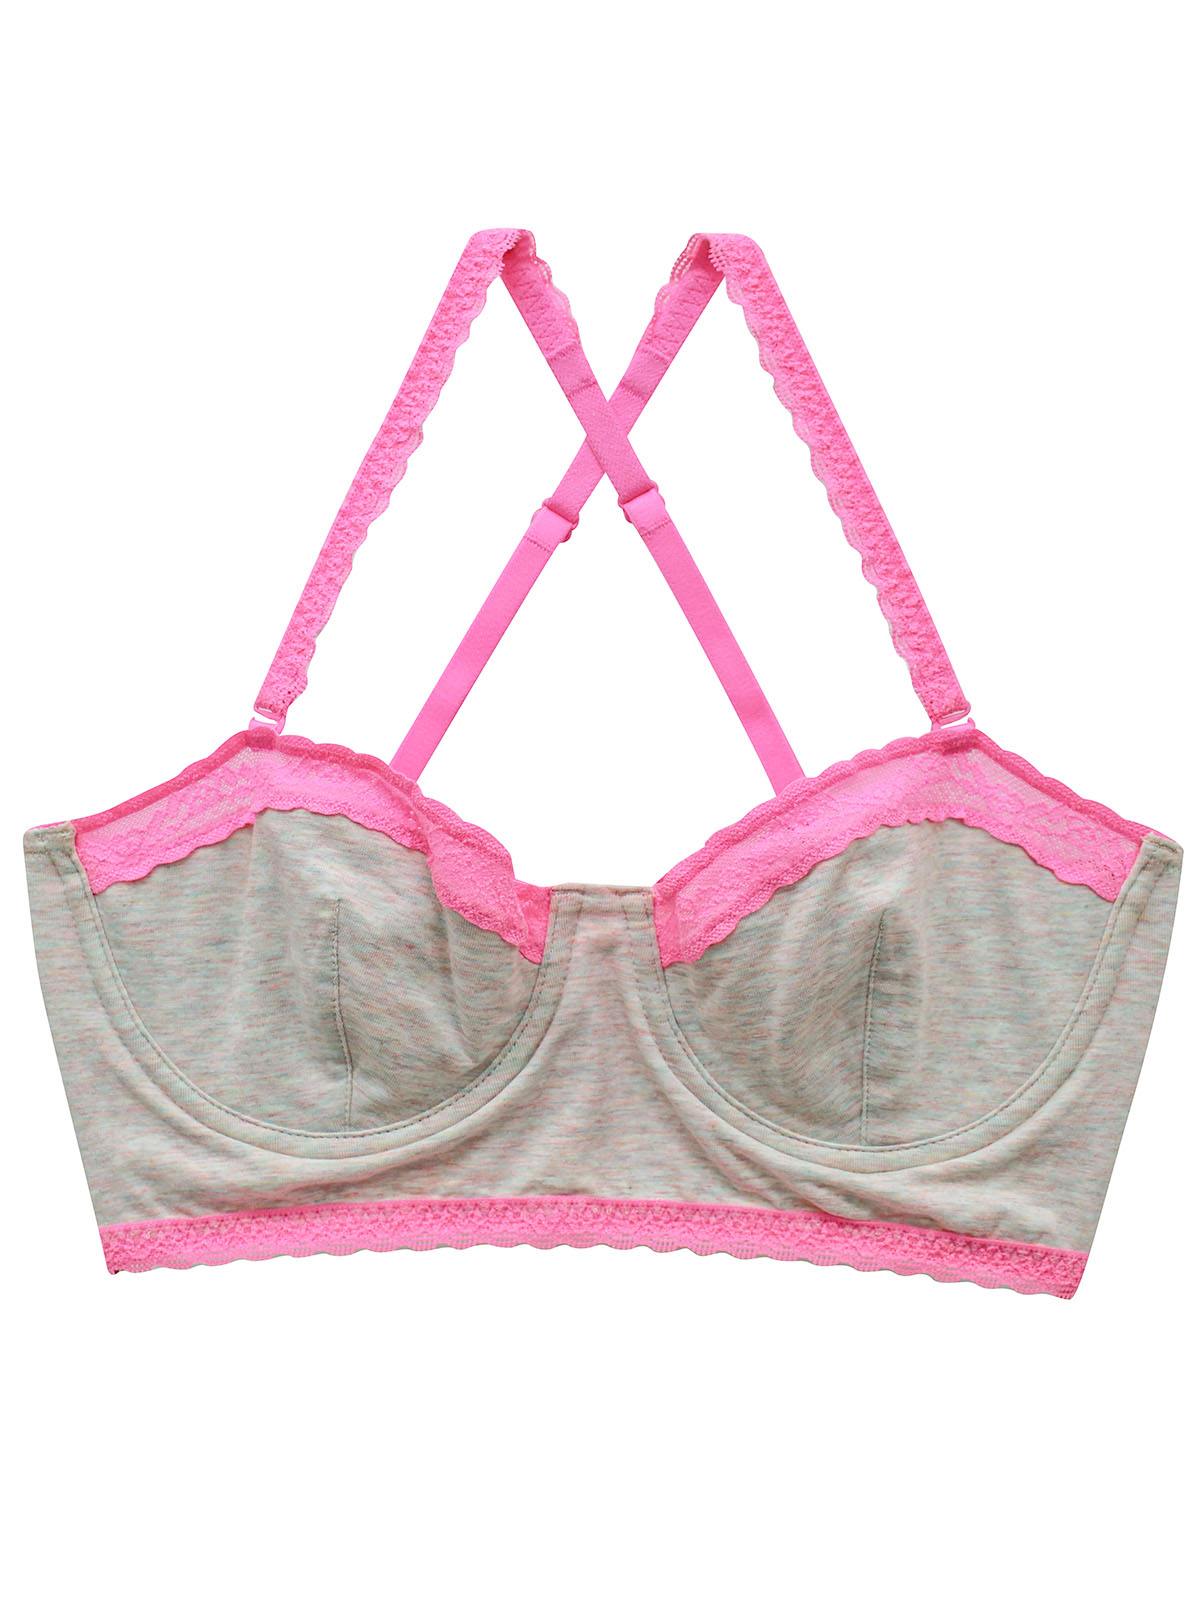 Victoria's Secret Pink Bra 36B - Gem